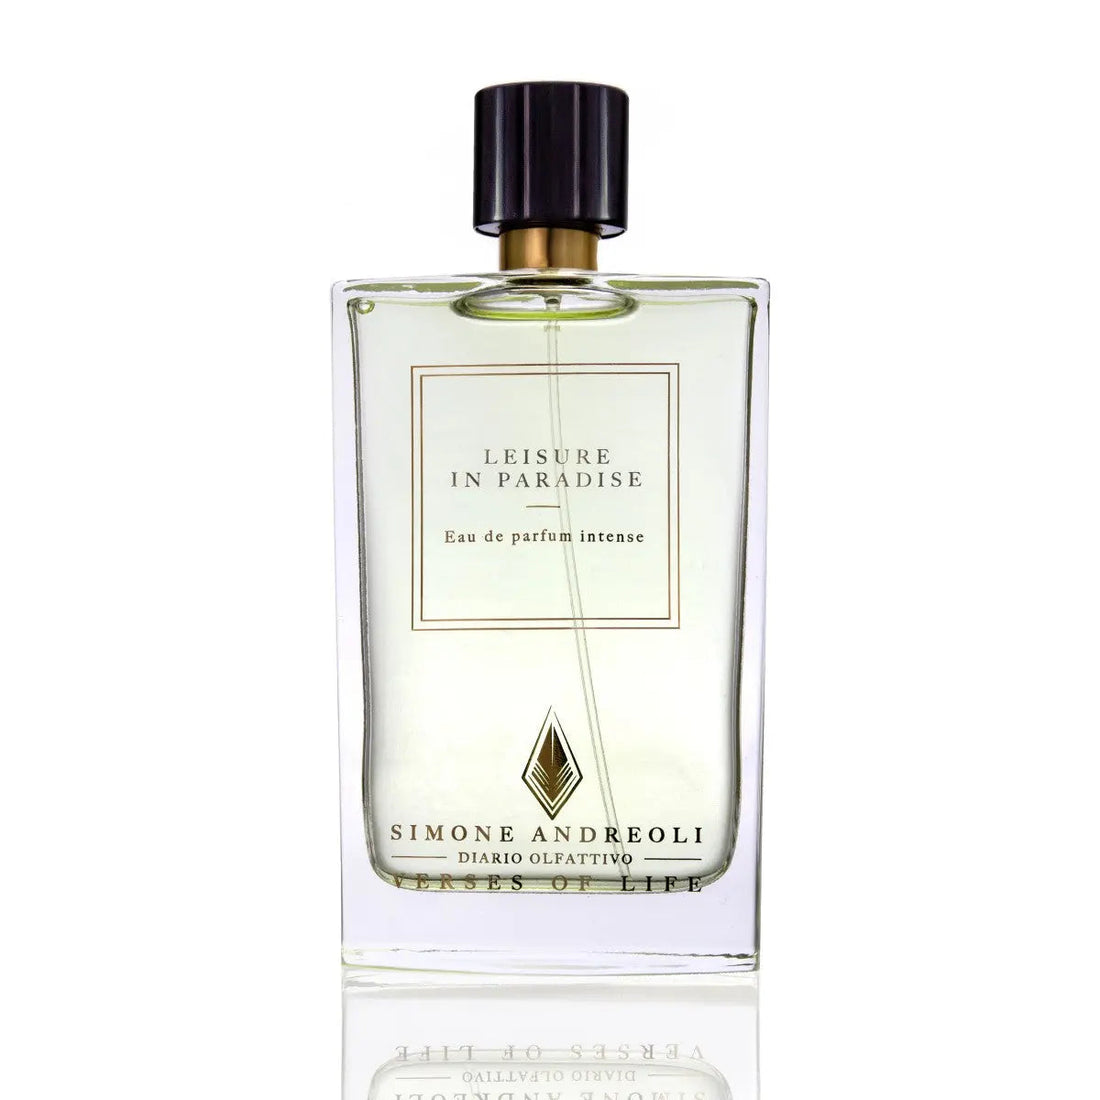 Simone Andreoli Leisure in Paradise eau de Parfum intense - 7.5 ml